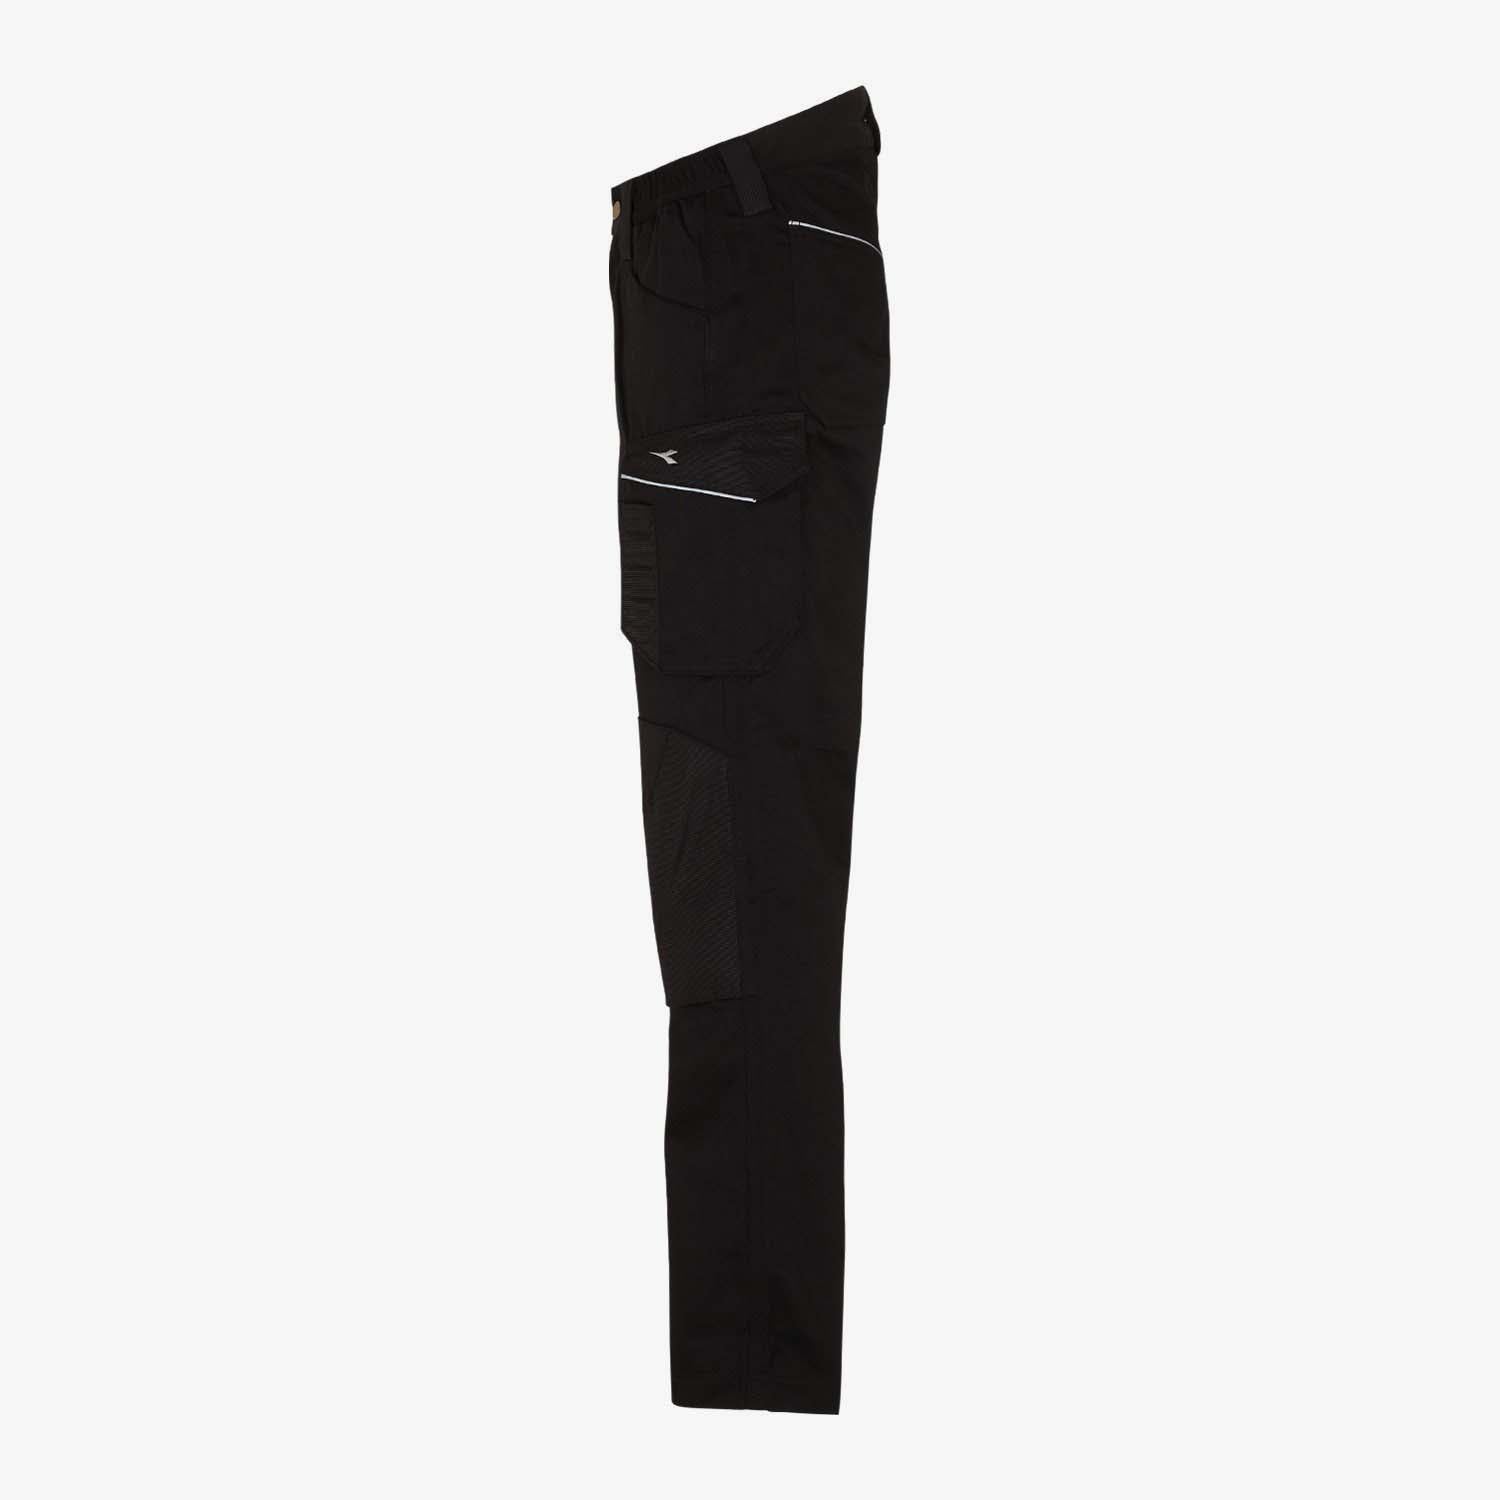 Pantaloni Diadora " rock winter " colore nero